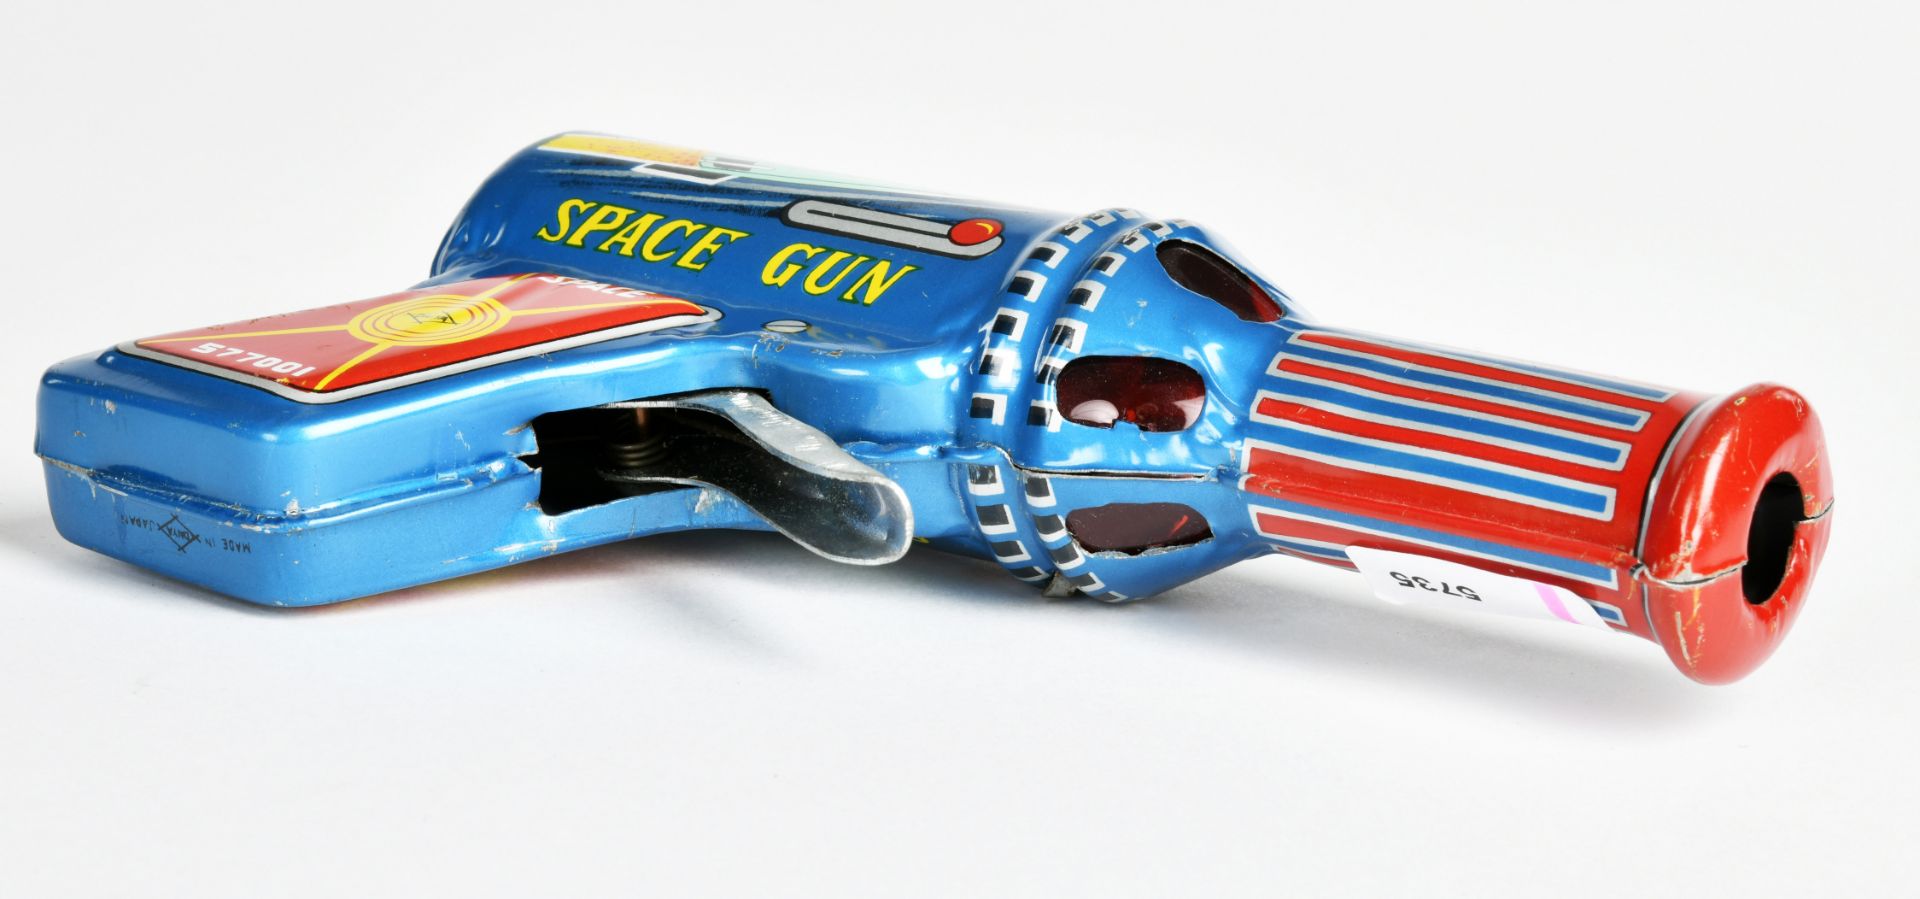 Daiya, Baby Space Gun - Bild 3 aus 3